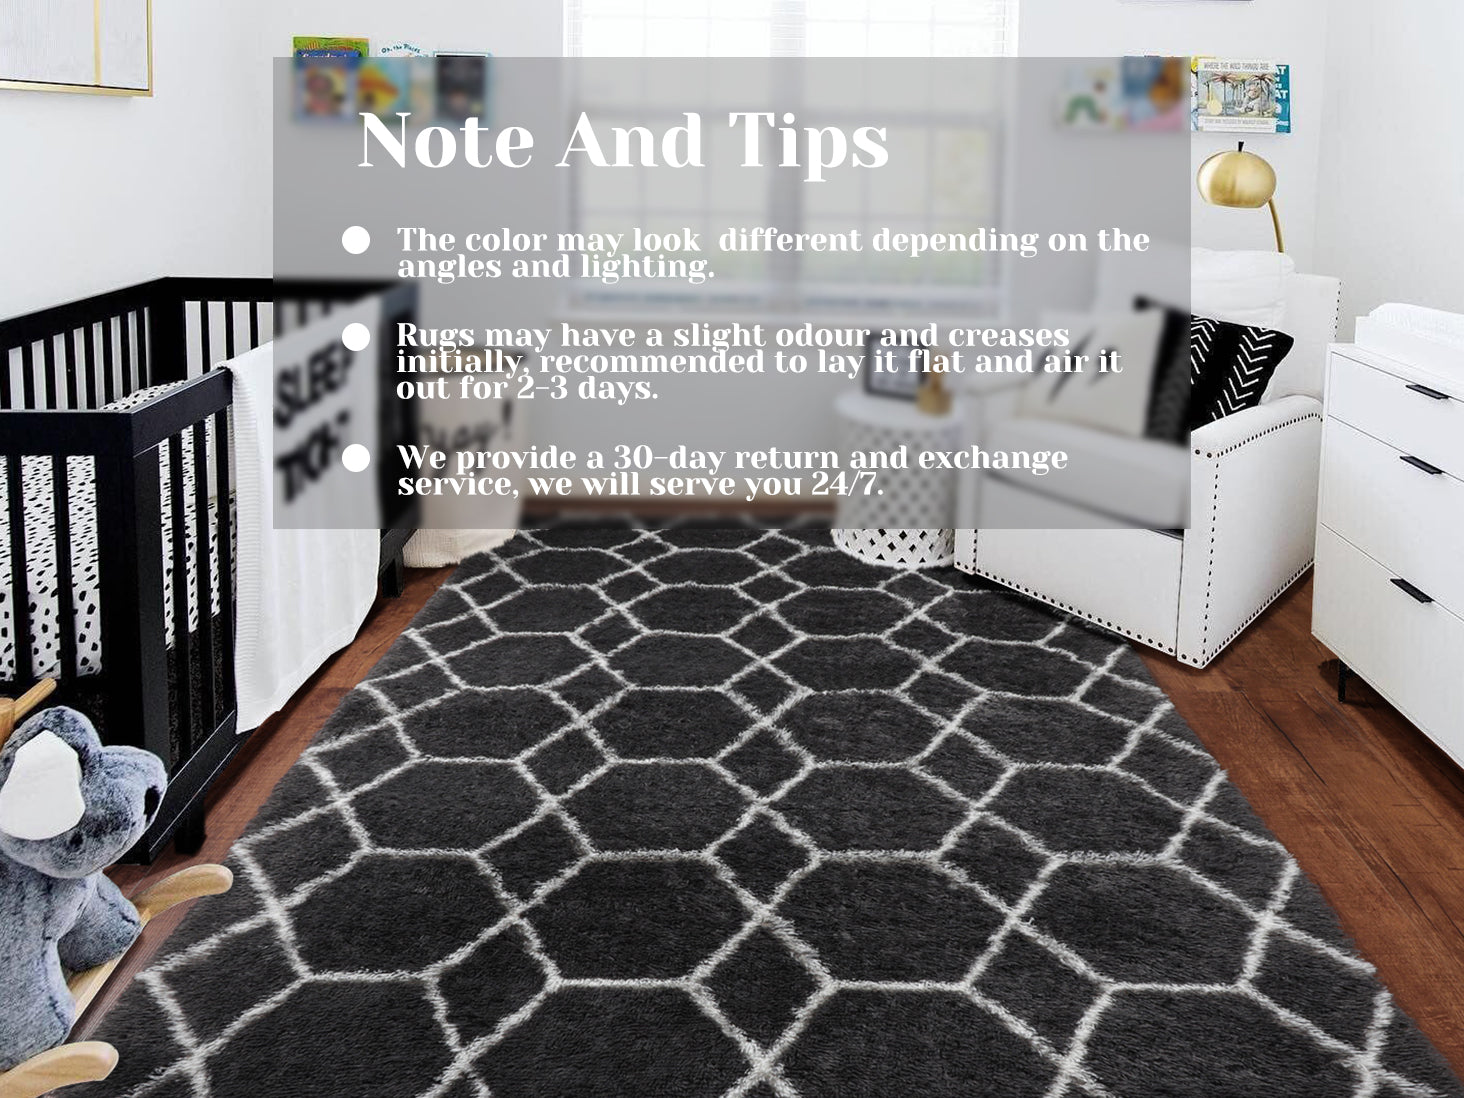 Large Modern Shag Rug for Living Room, Geometric Floor Rug, Dark Grey and White Rug